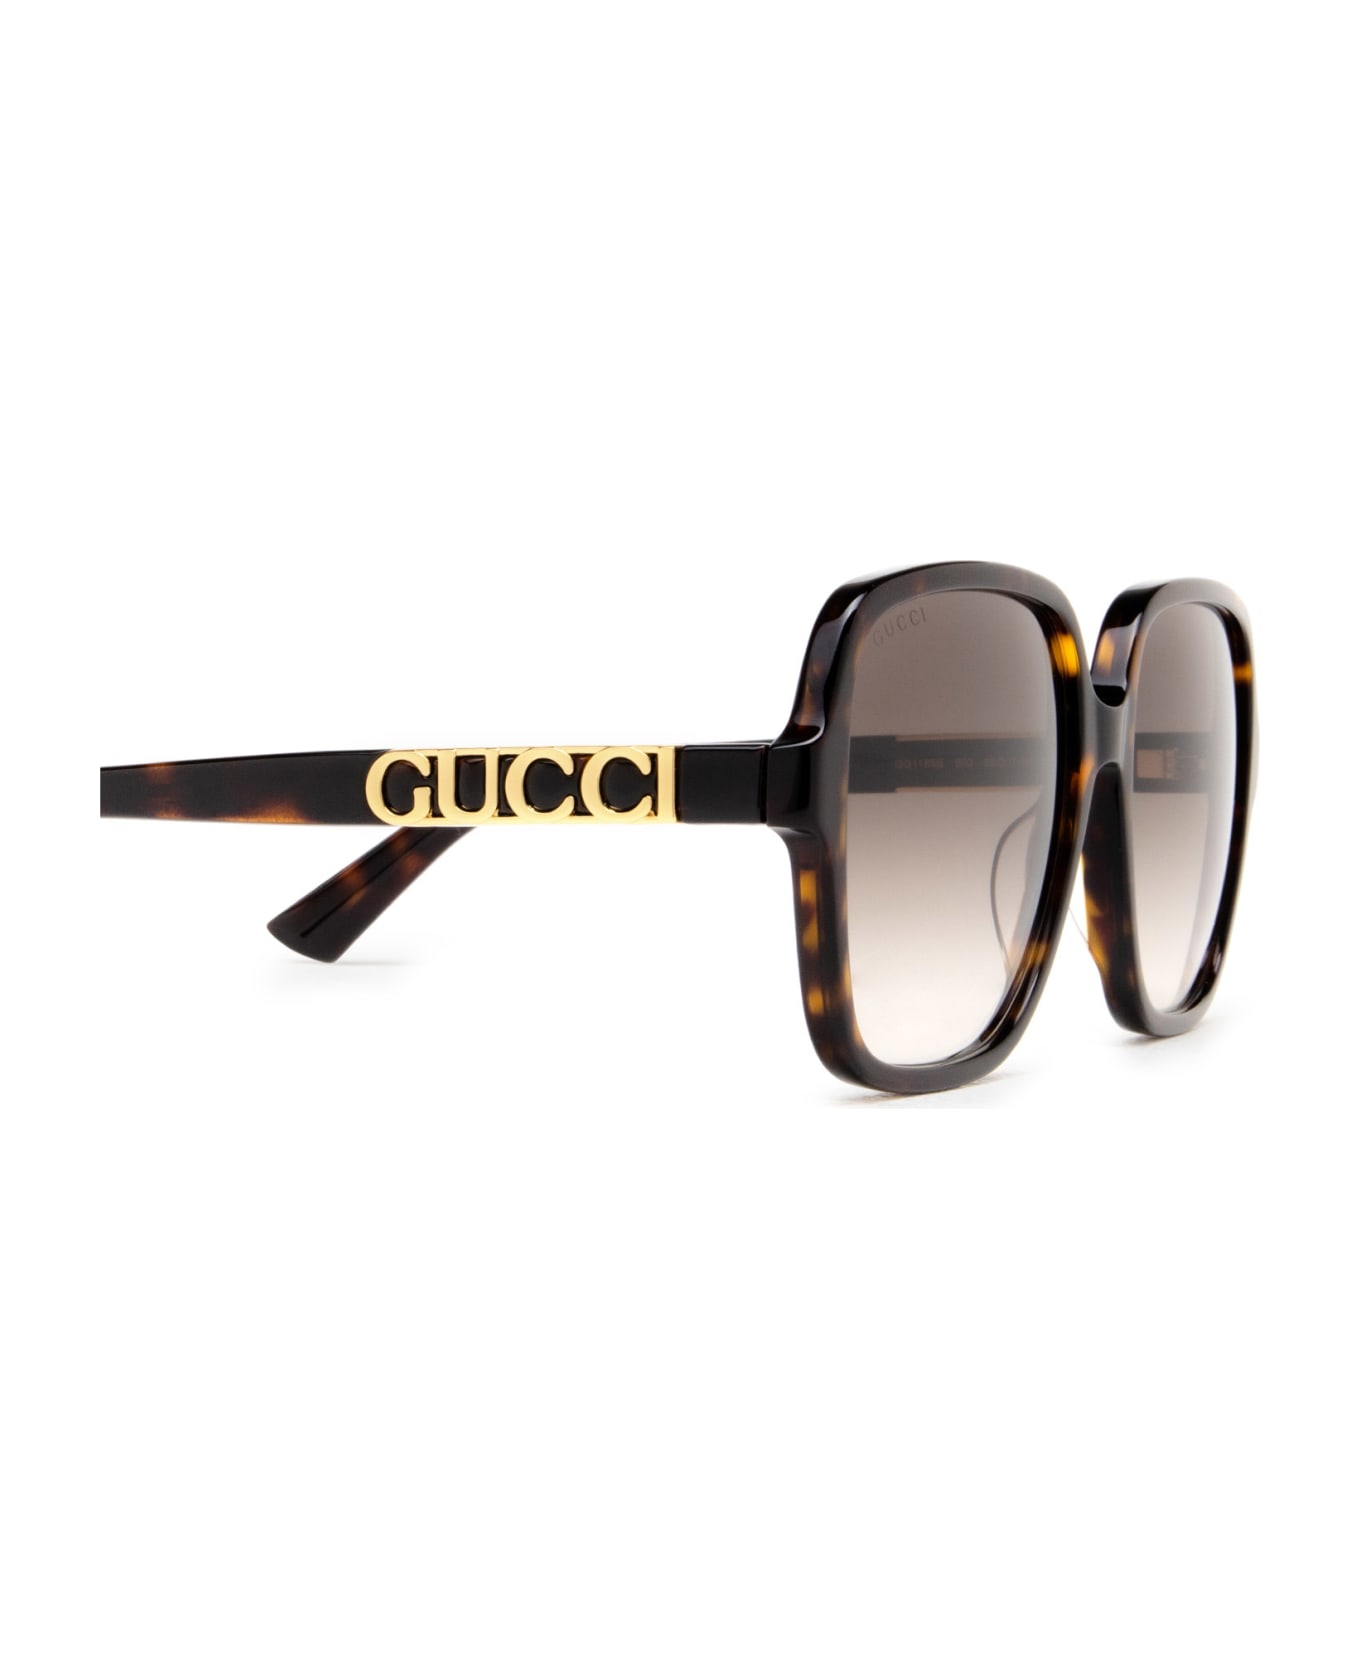 Gucci Eyewear Gg1189s Havana Sunglasses - Havana